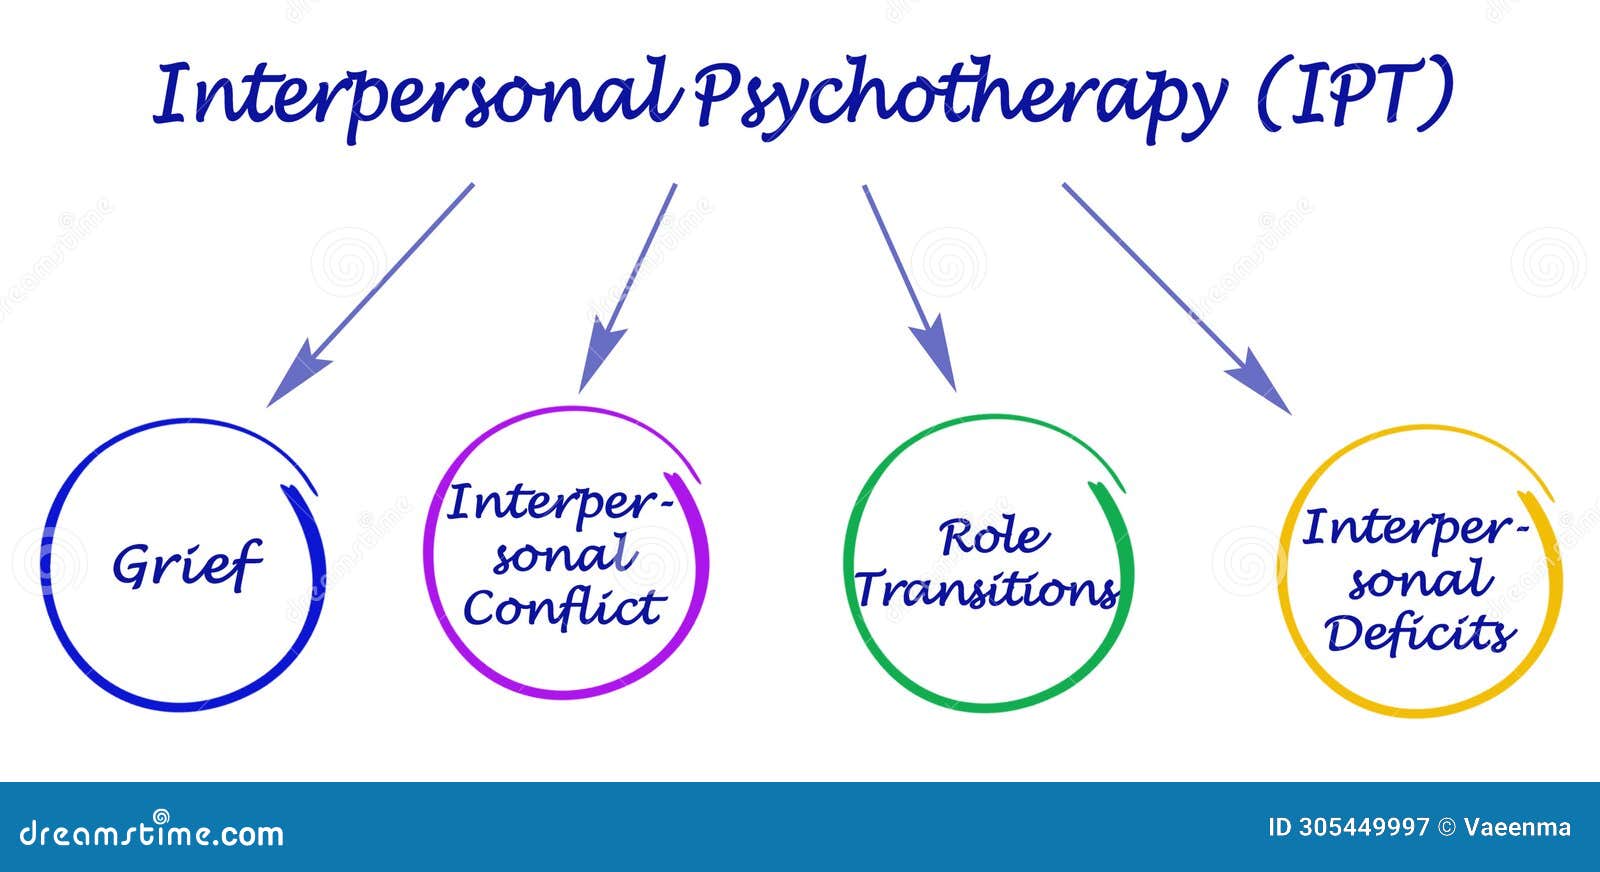 interpersonal psychotherapy (ipt)